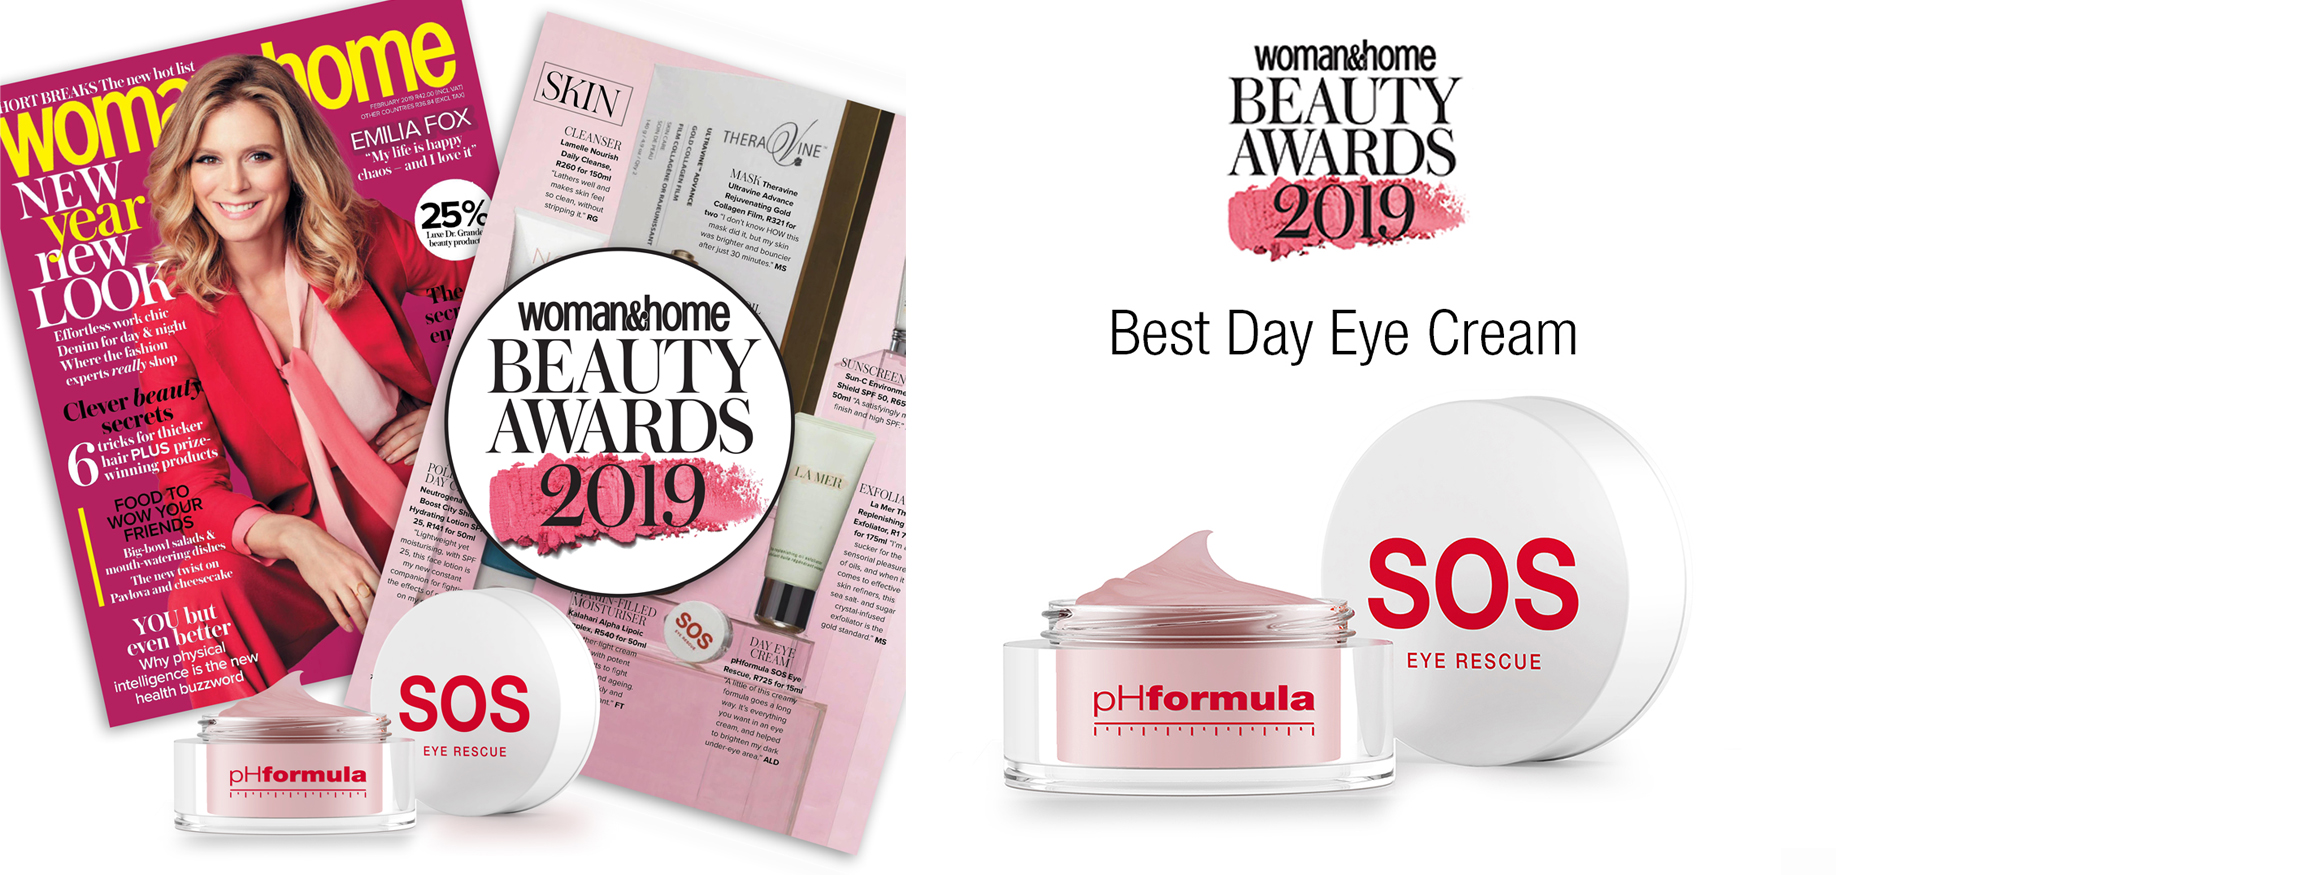 SOS eye rescue awarded Best Day Cream Beauty Award 2019